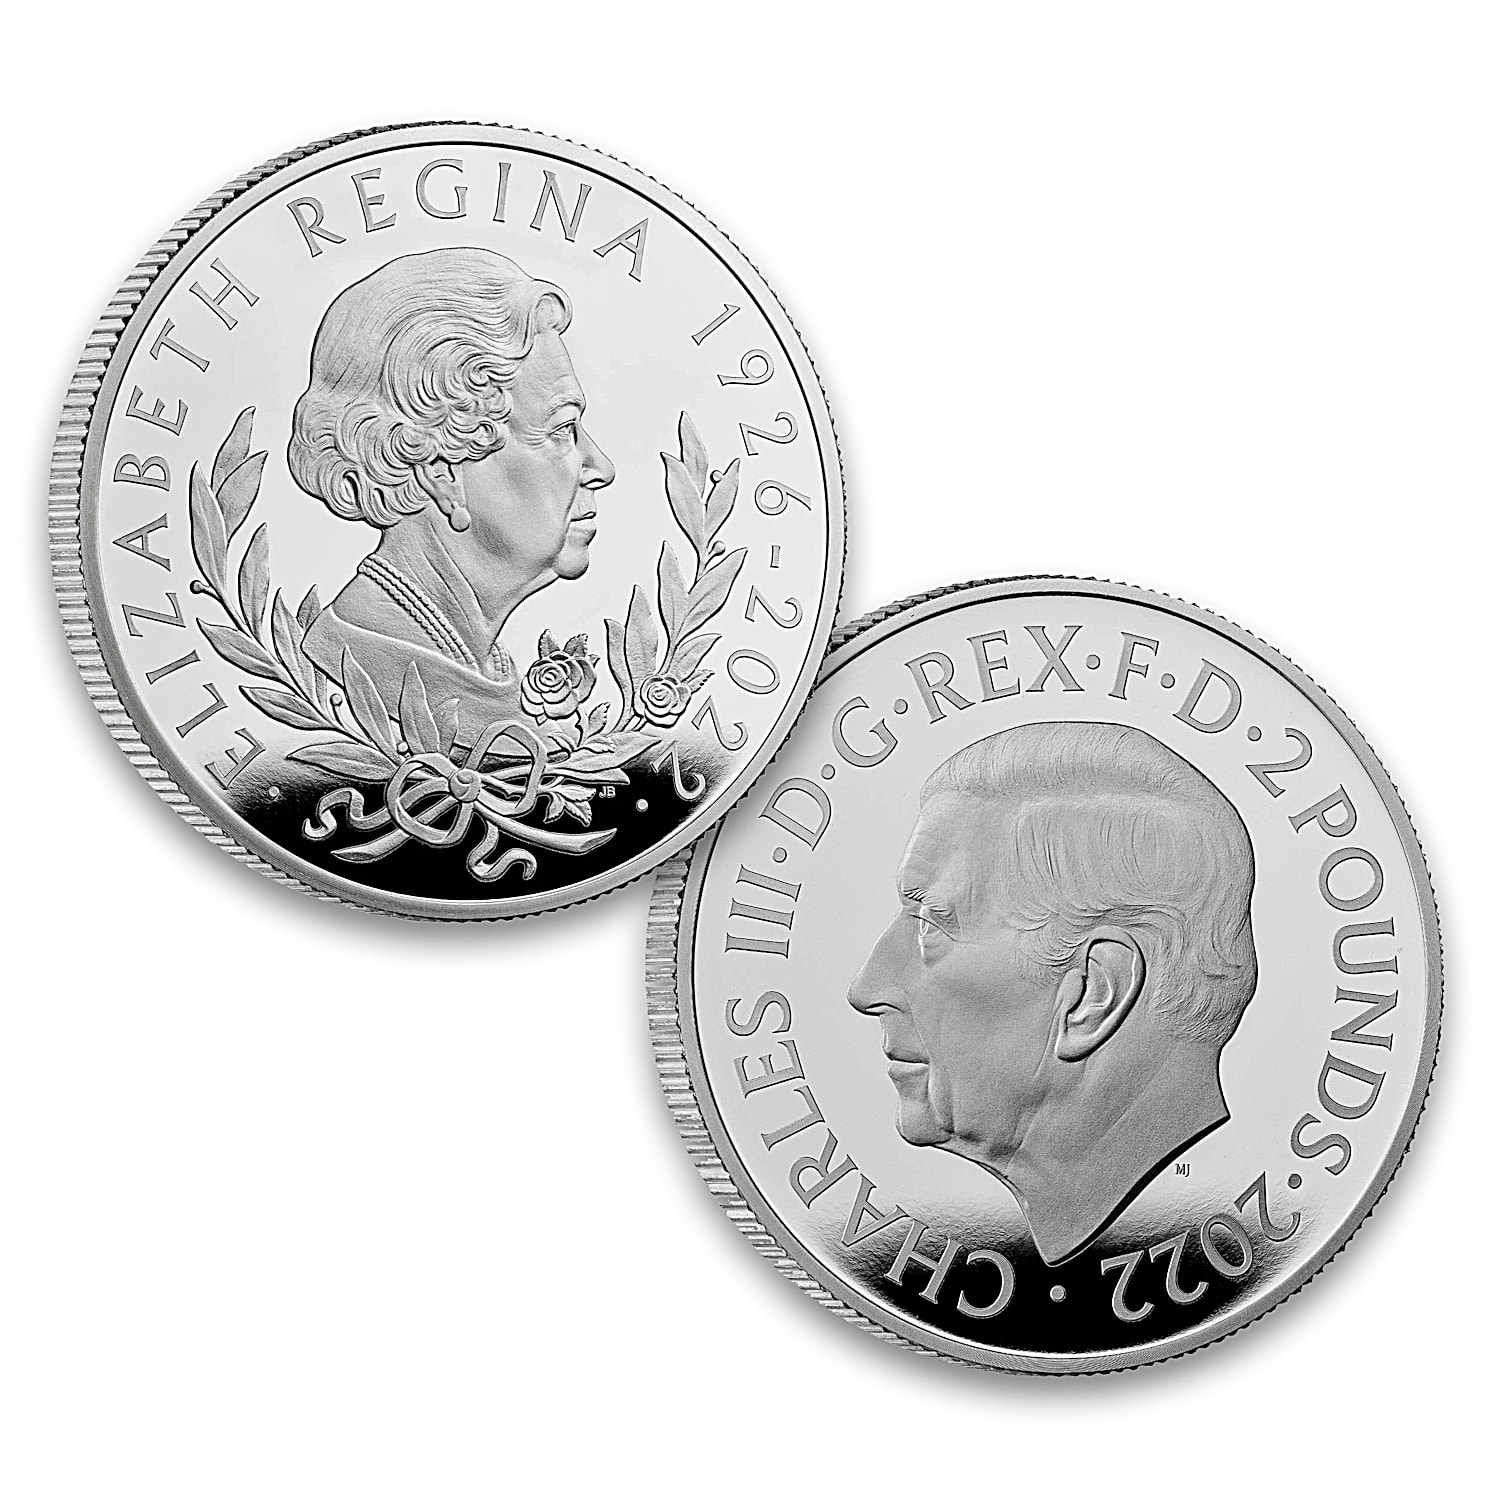 Her Majesty Queen Elizabeth II 2022 1 Oz. Silver Proof Coin